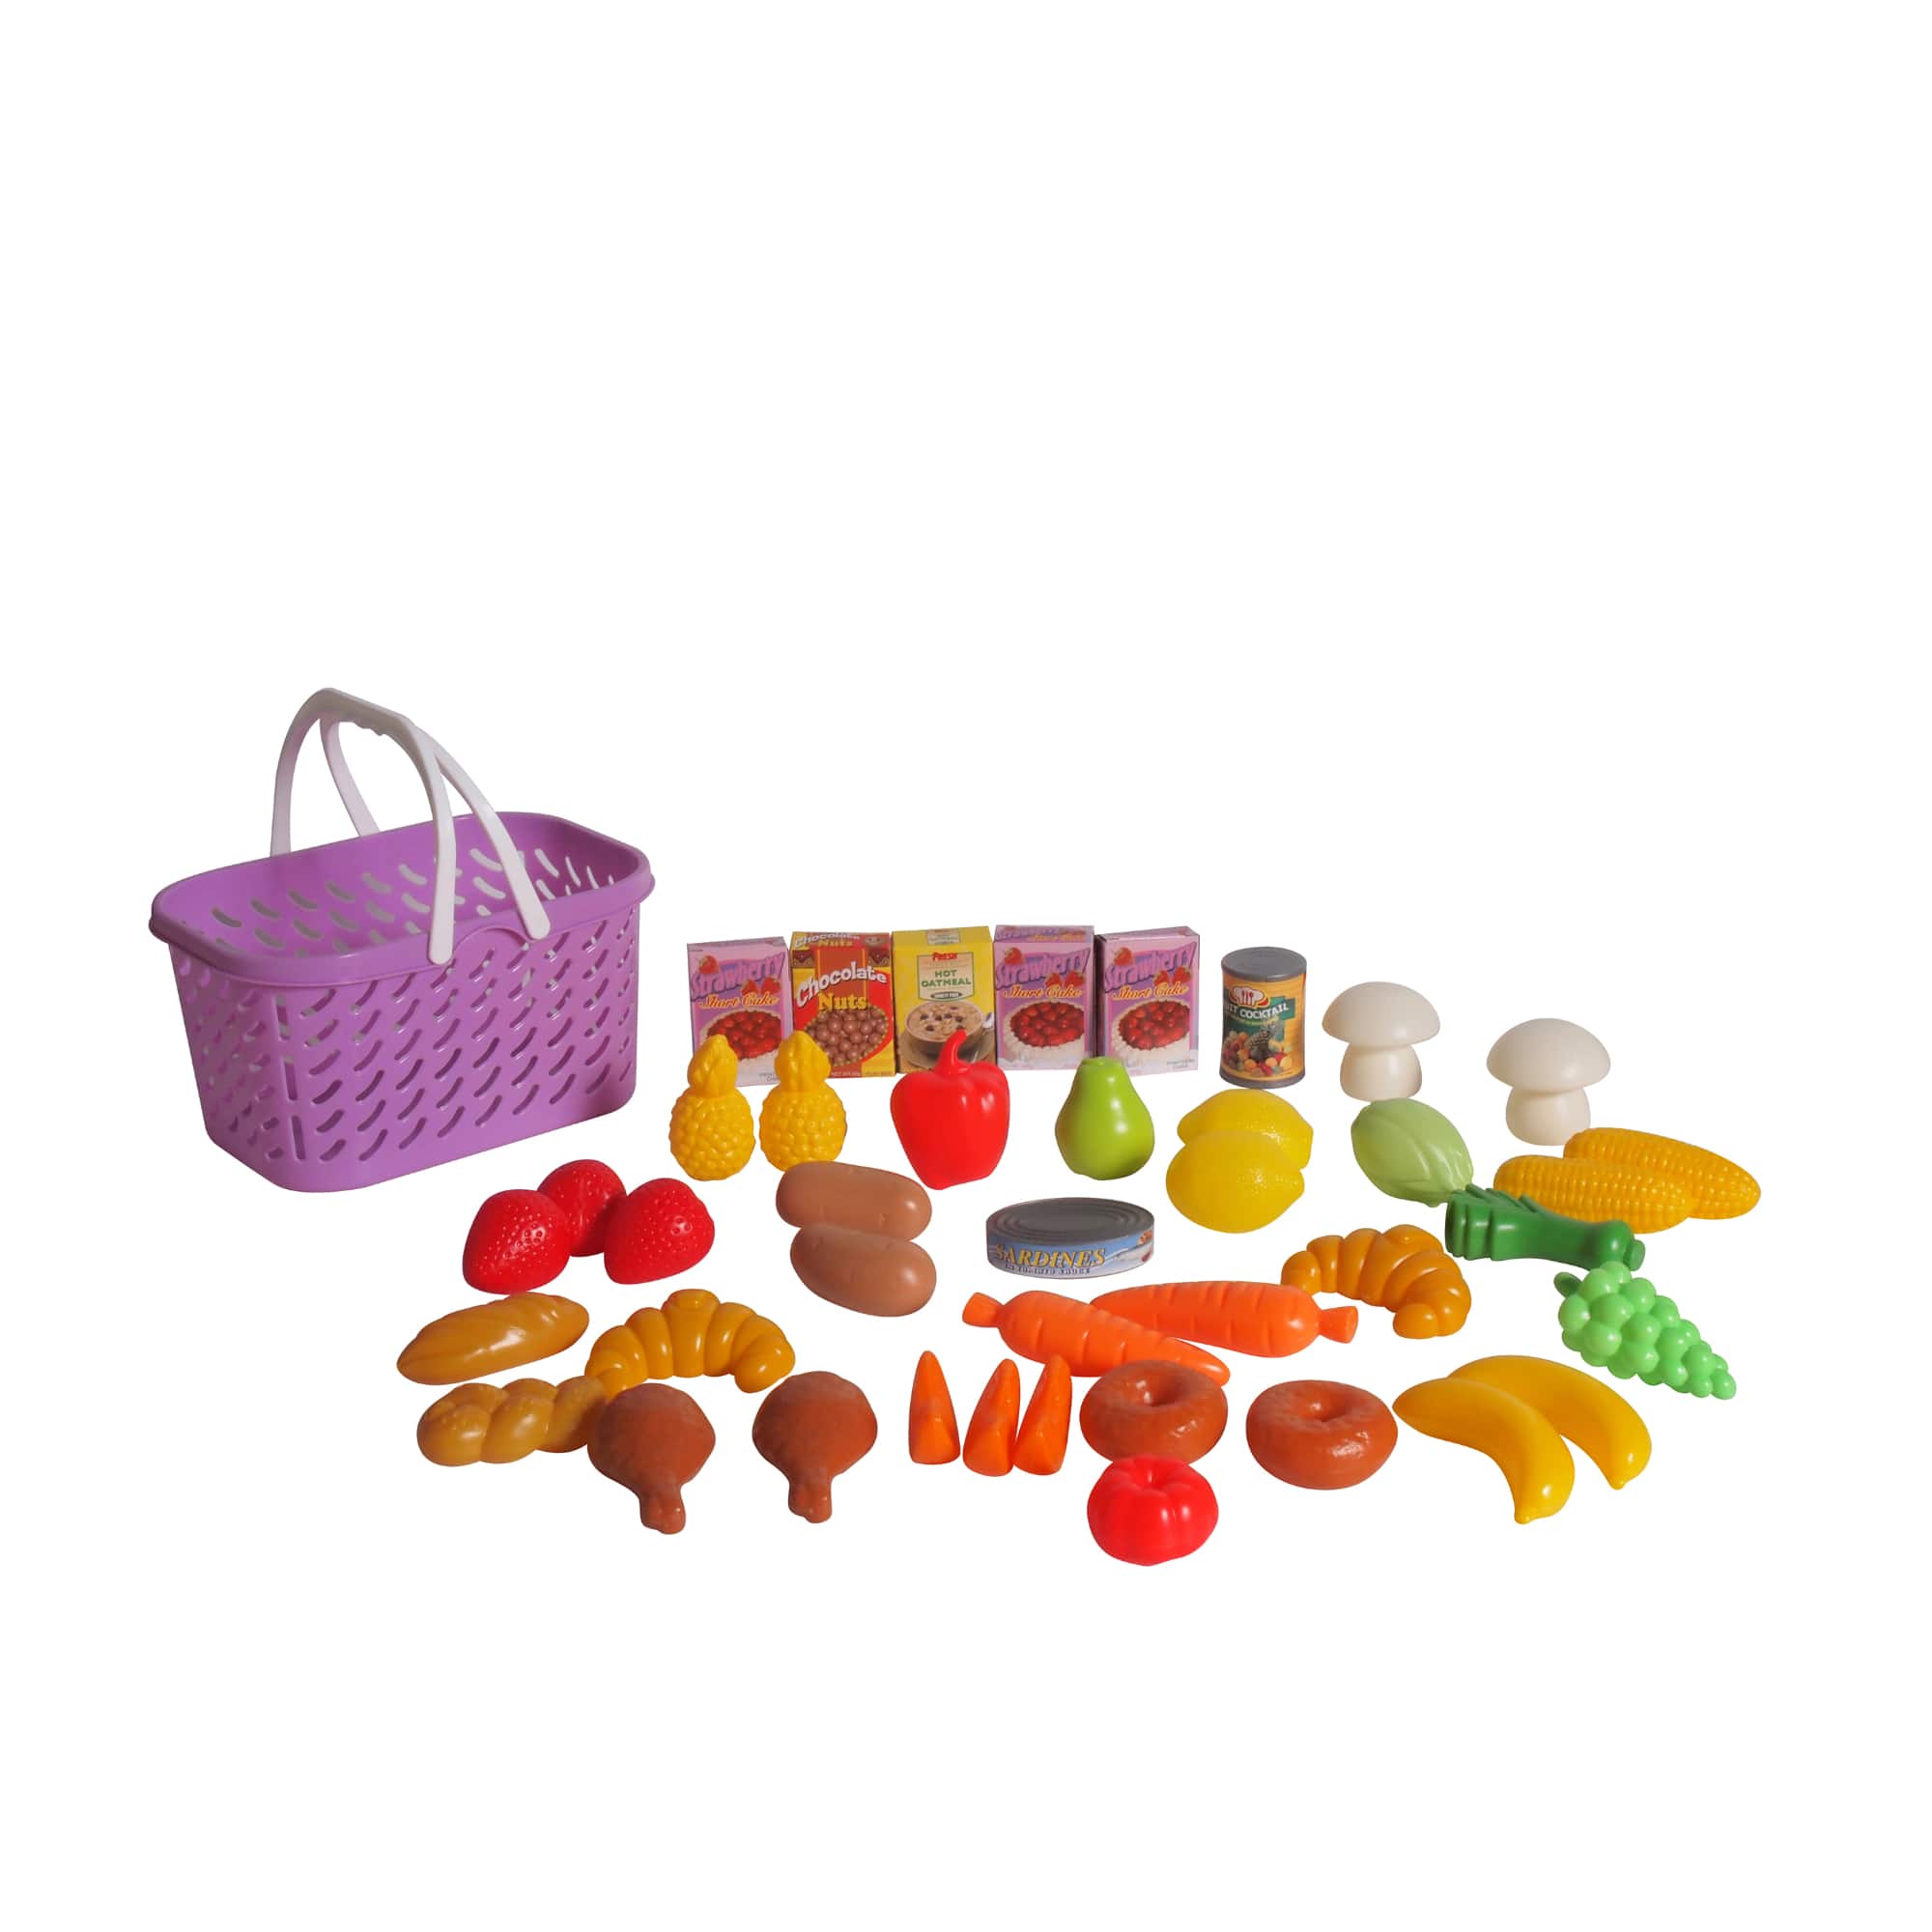 Gi-Go Toys 40 Piece Play Food Basket Set